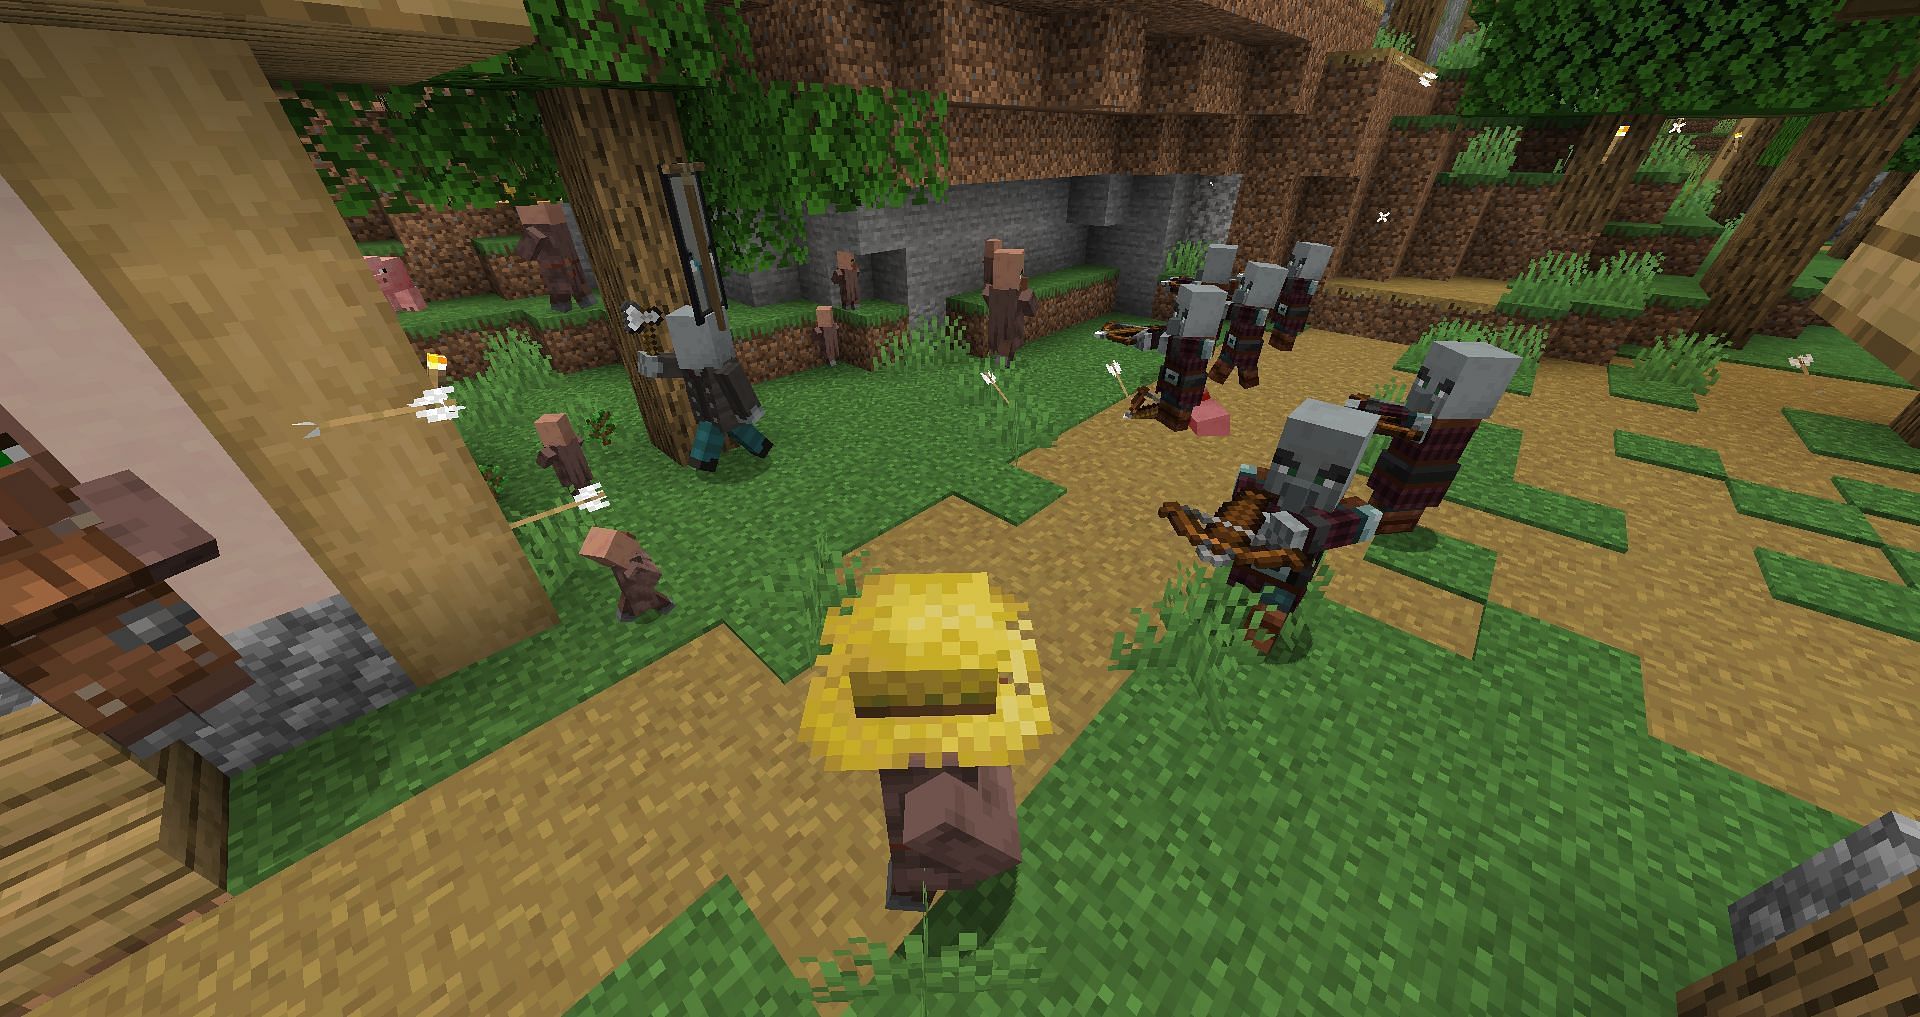 A raid in progress (Image via Minecraft)